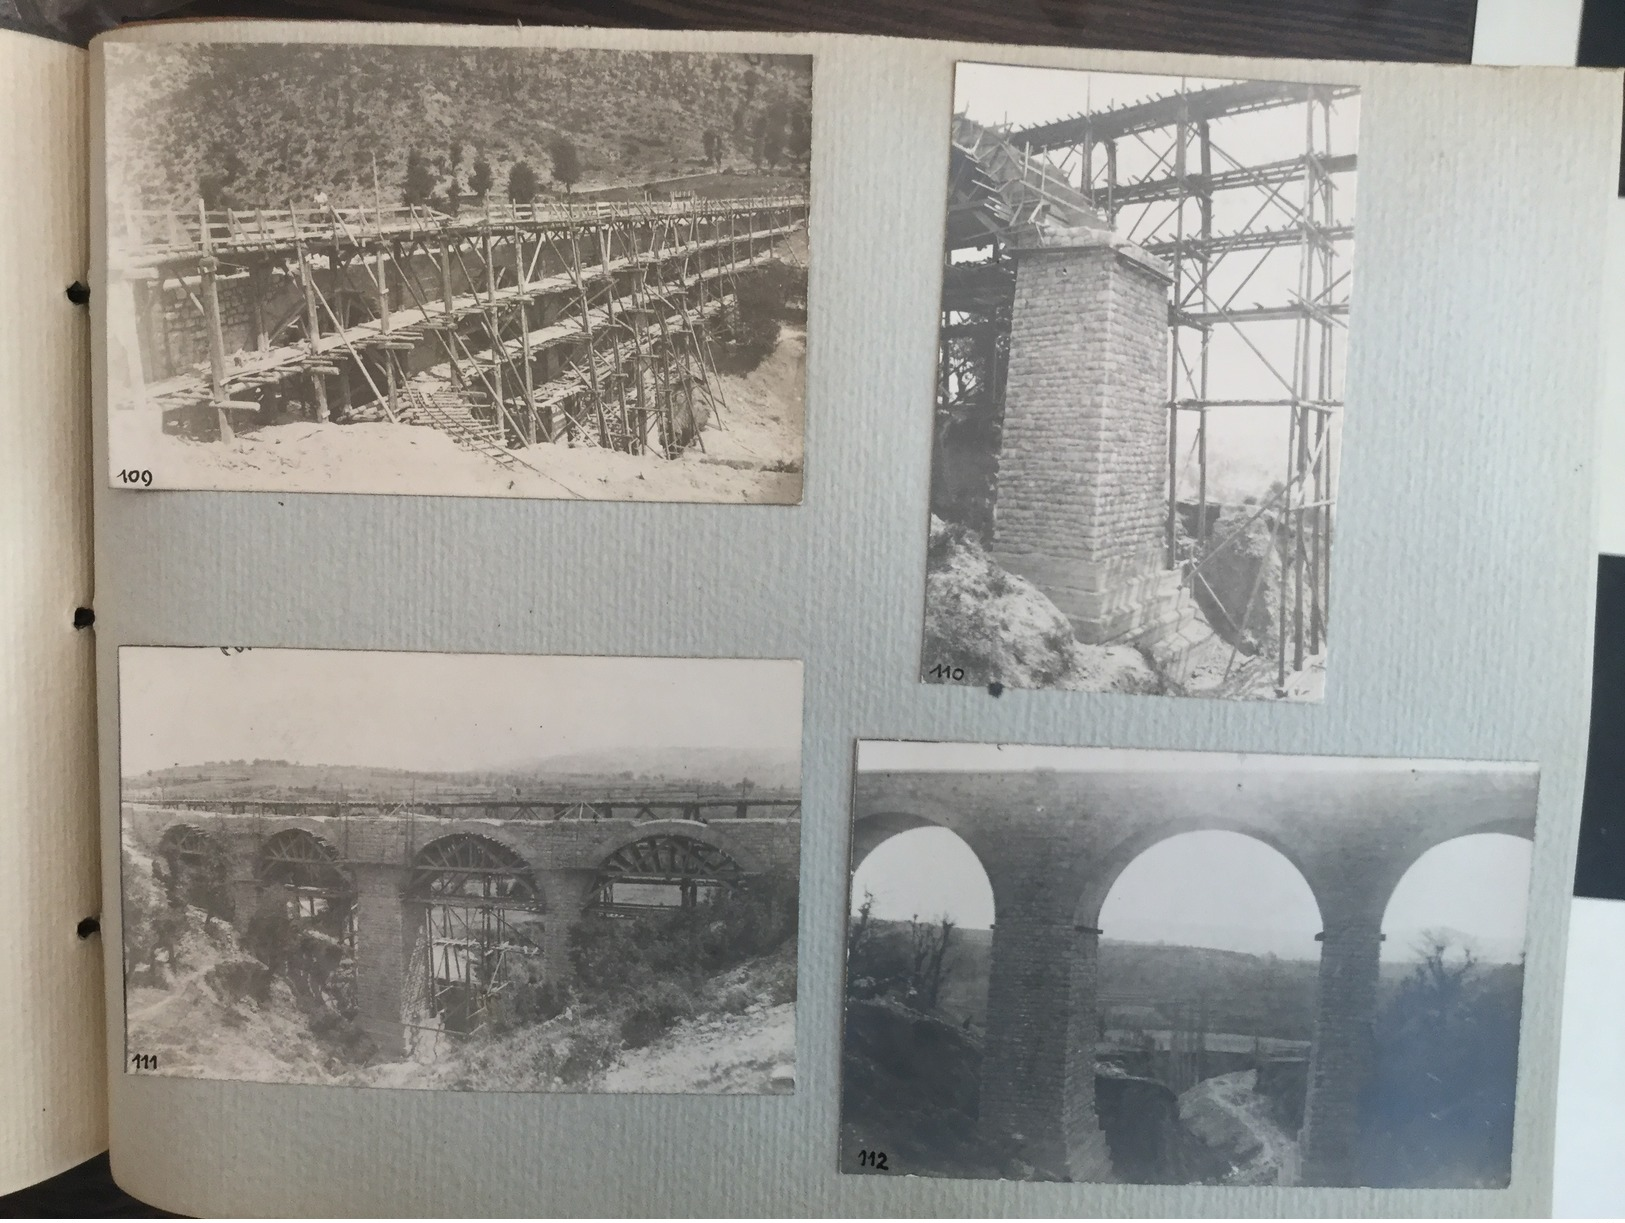 IZGRADNJA PRUGE  :KNIN -  GRACAC Construction of railway line  Knin - Gracac  BAHNHOF   RAILWAY   TRAIN  ZUG  170 PHOTOS